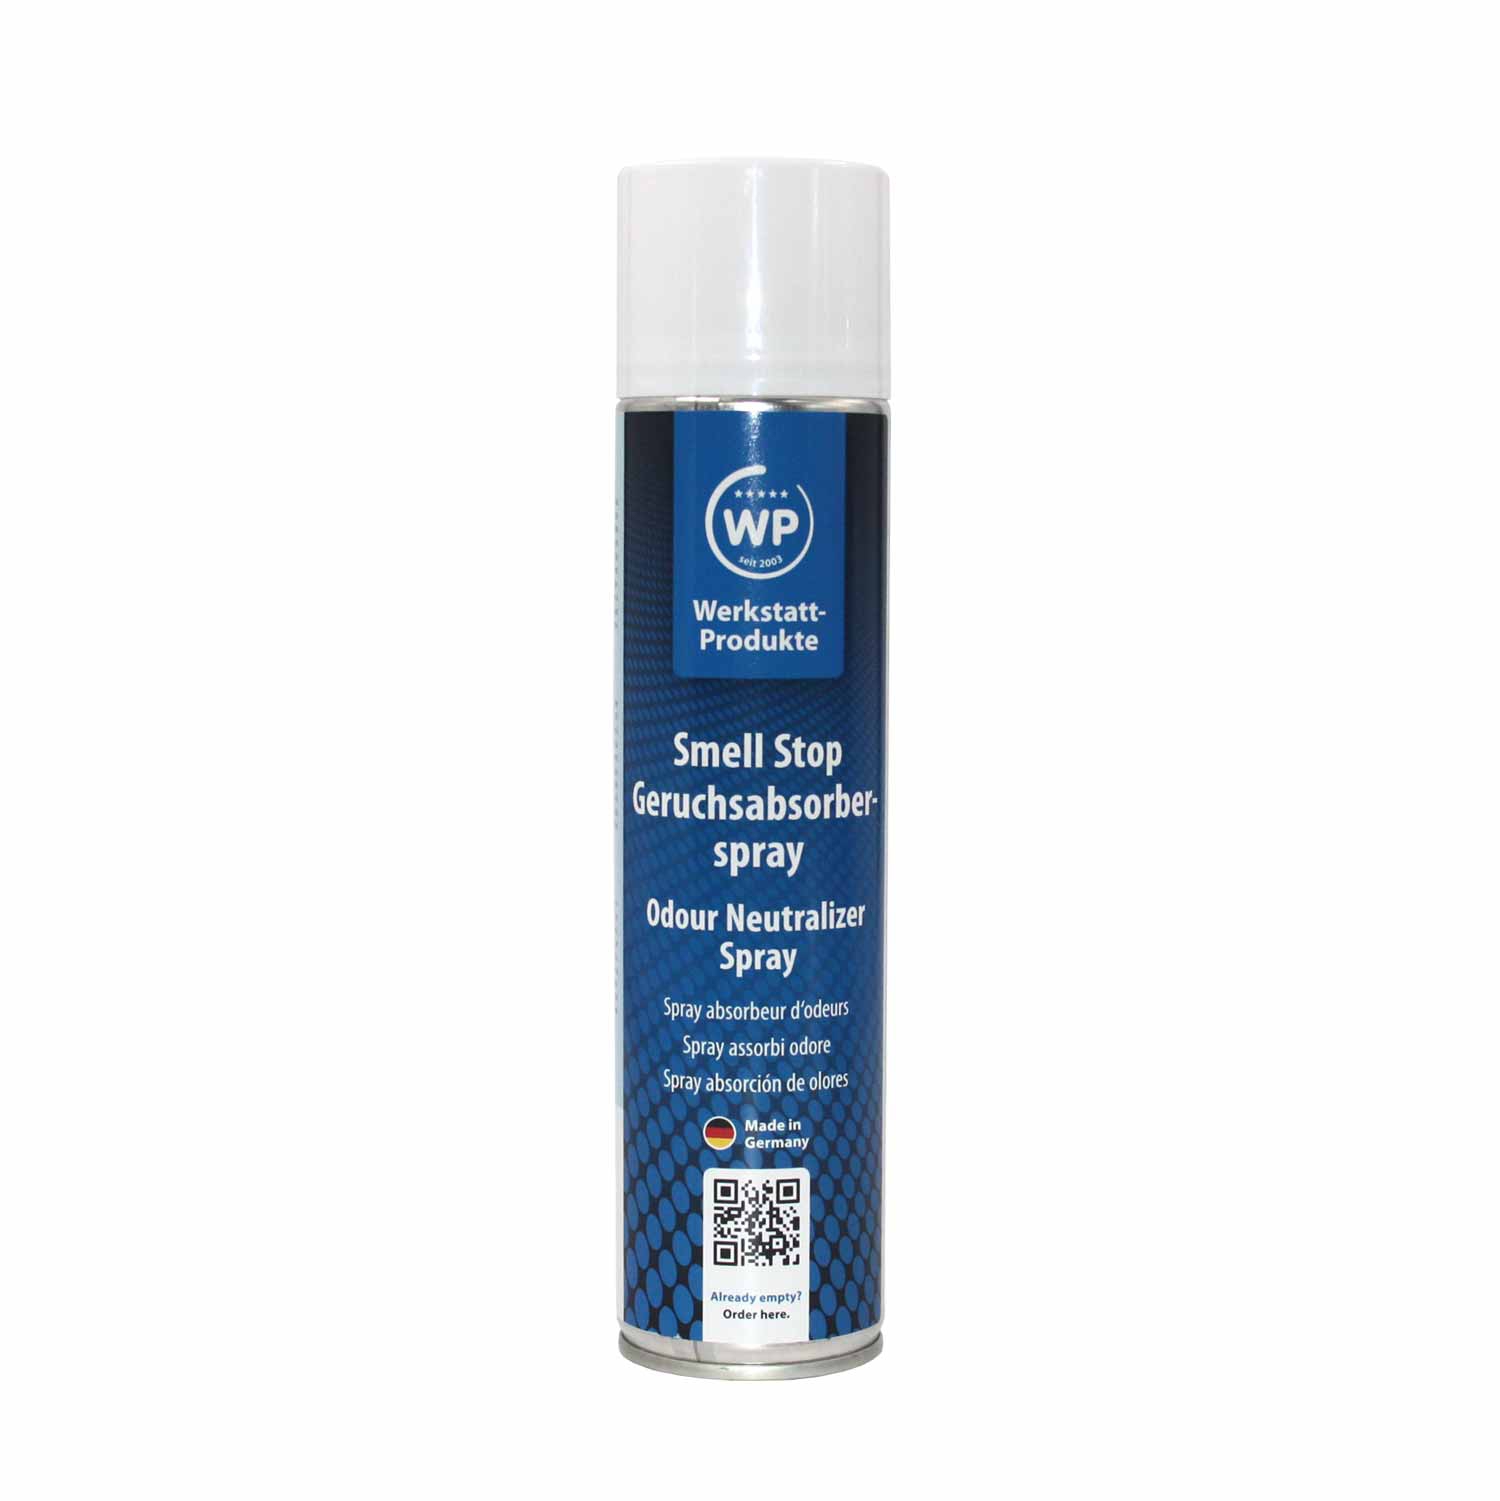 WP Geruchsabsorberspray / Smell Stop Spray 300ml